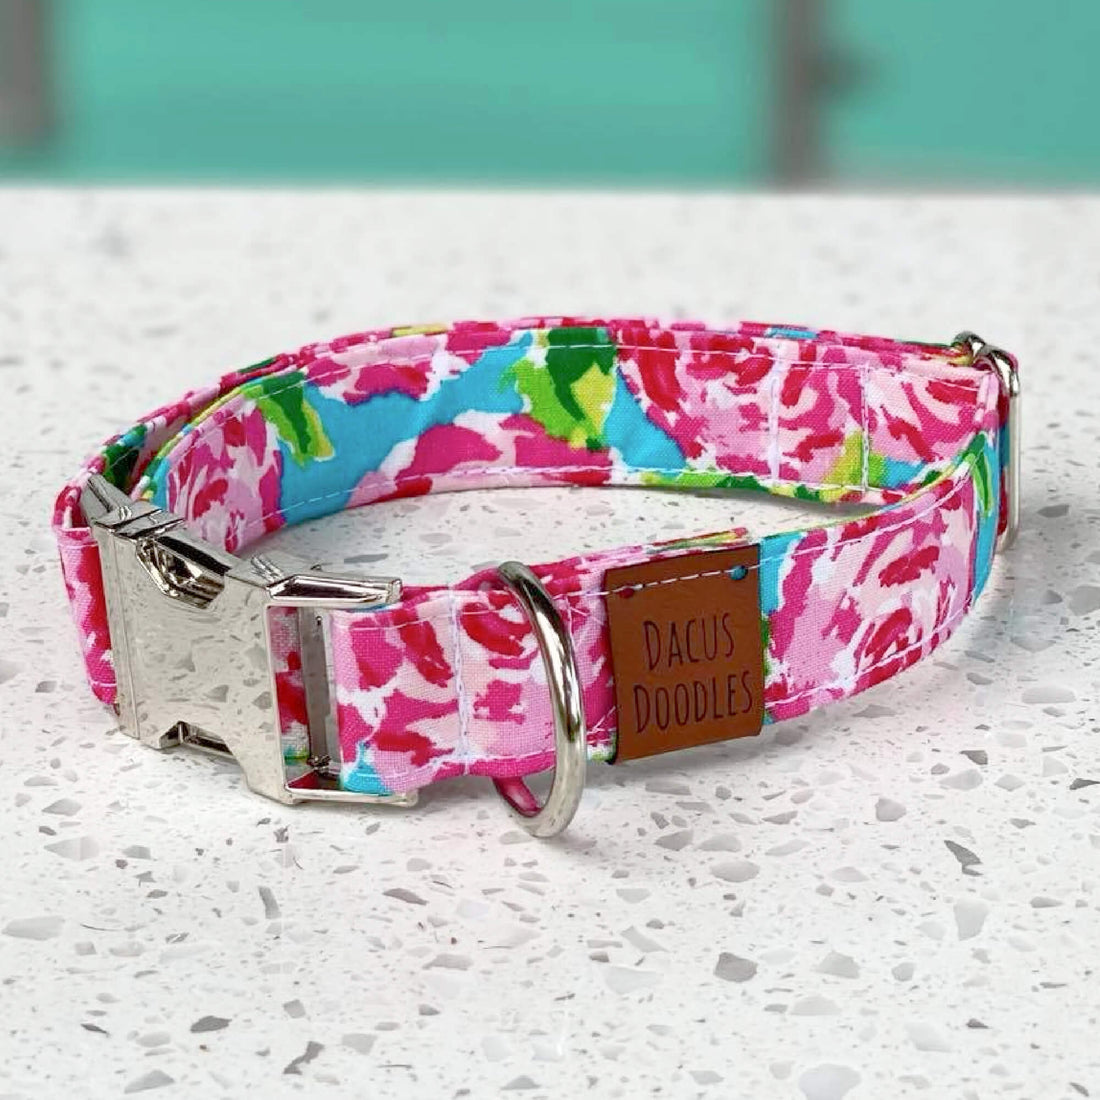 The Millie Pink Floral Dog Collar